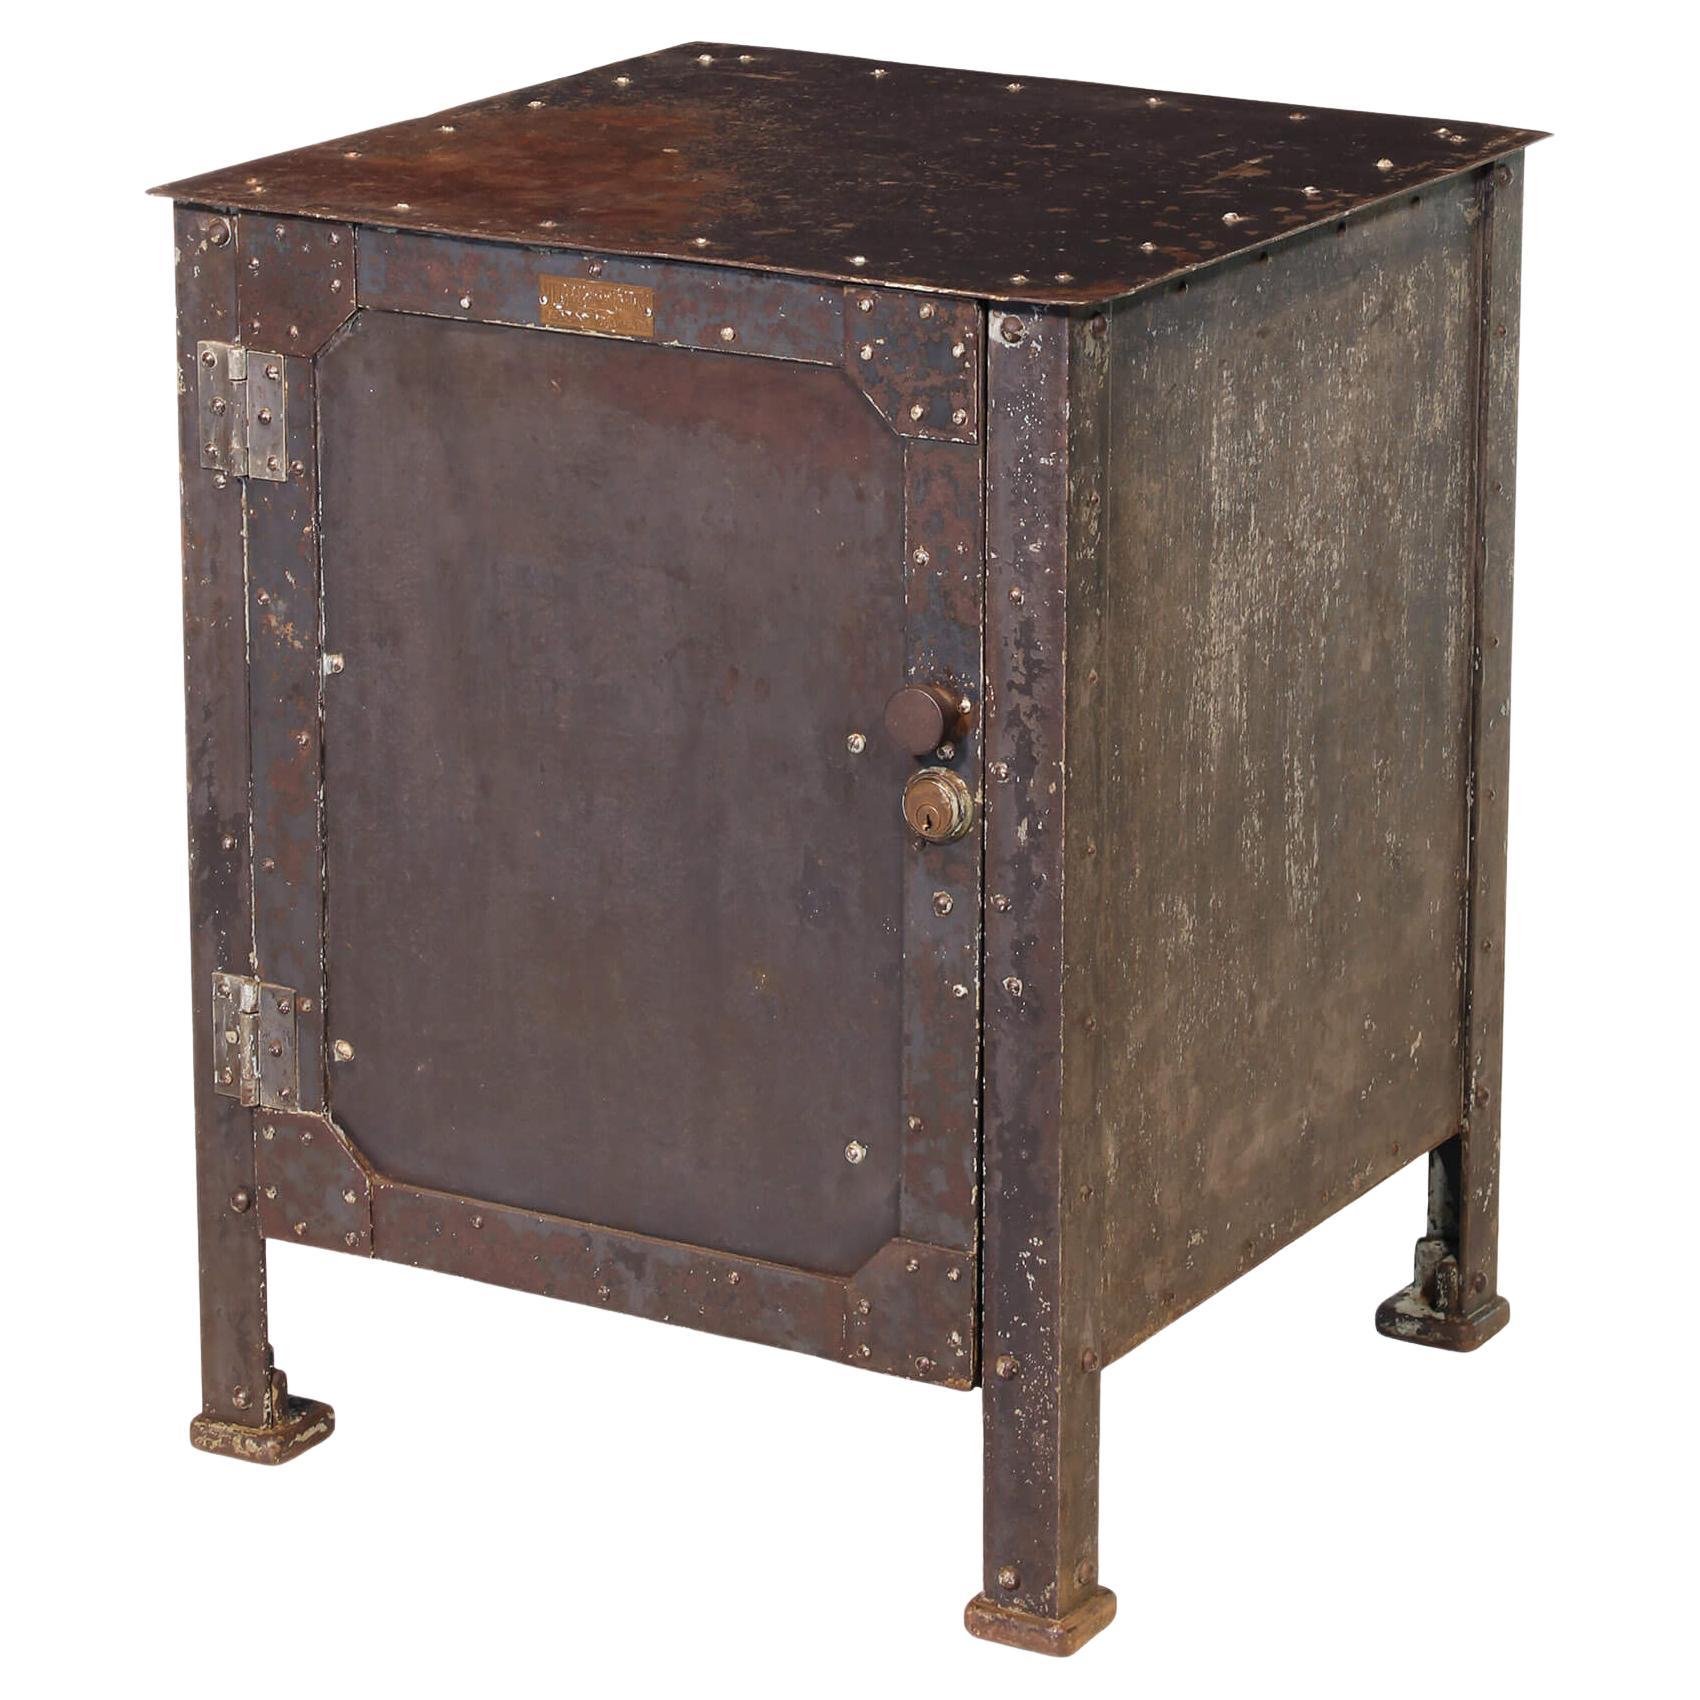 Vintage Industrial Riveted "Textile Machine Works" Cabinet